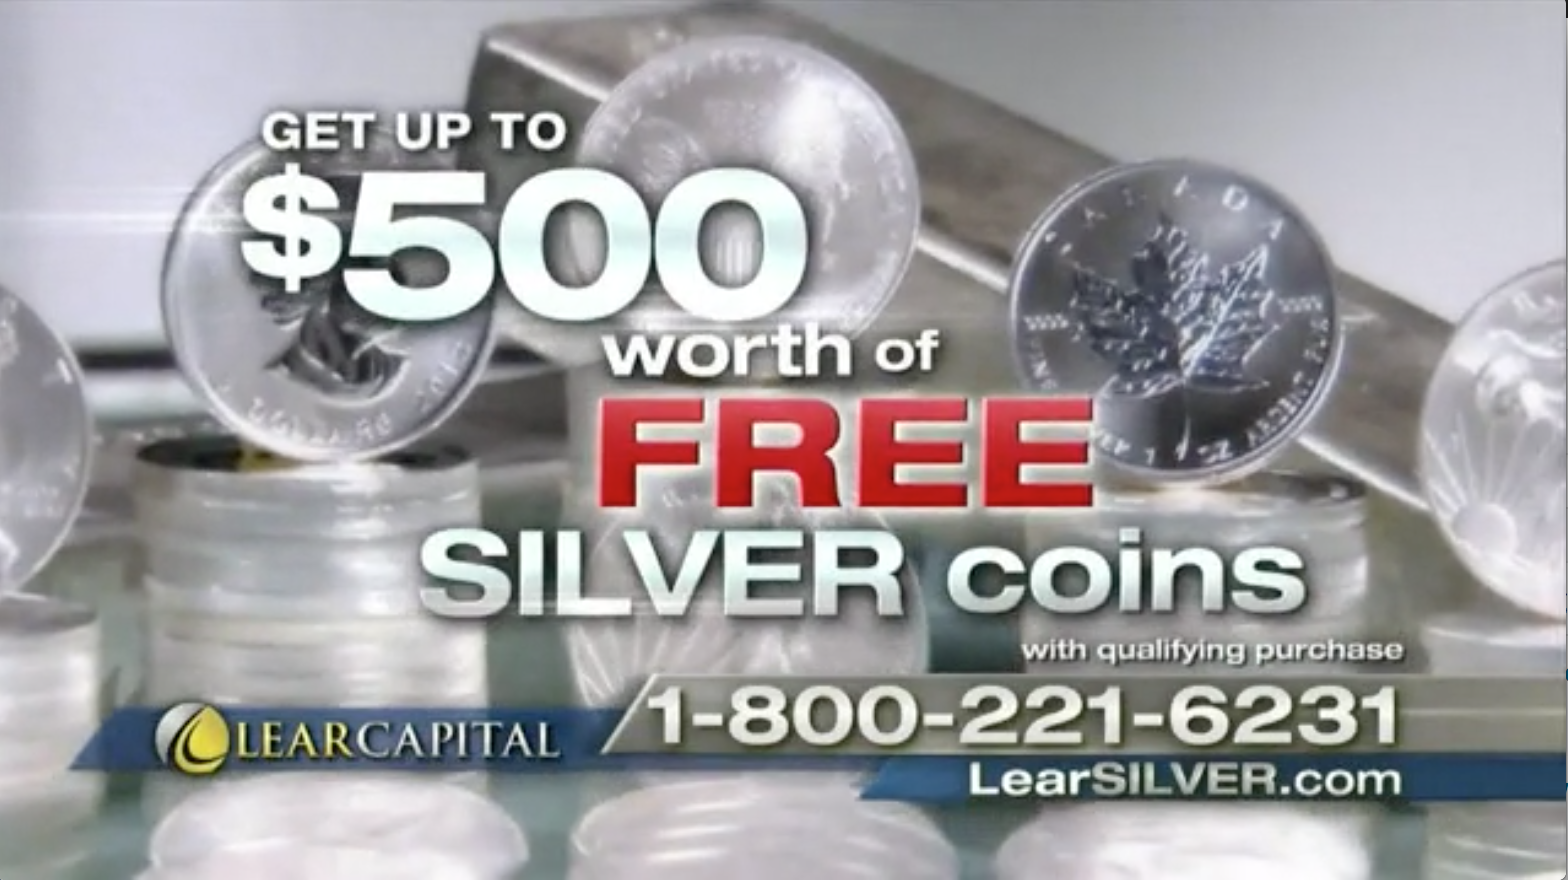 Lear Capital Free Silver